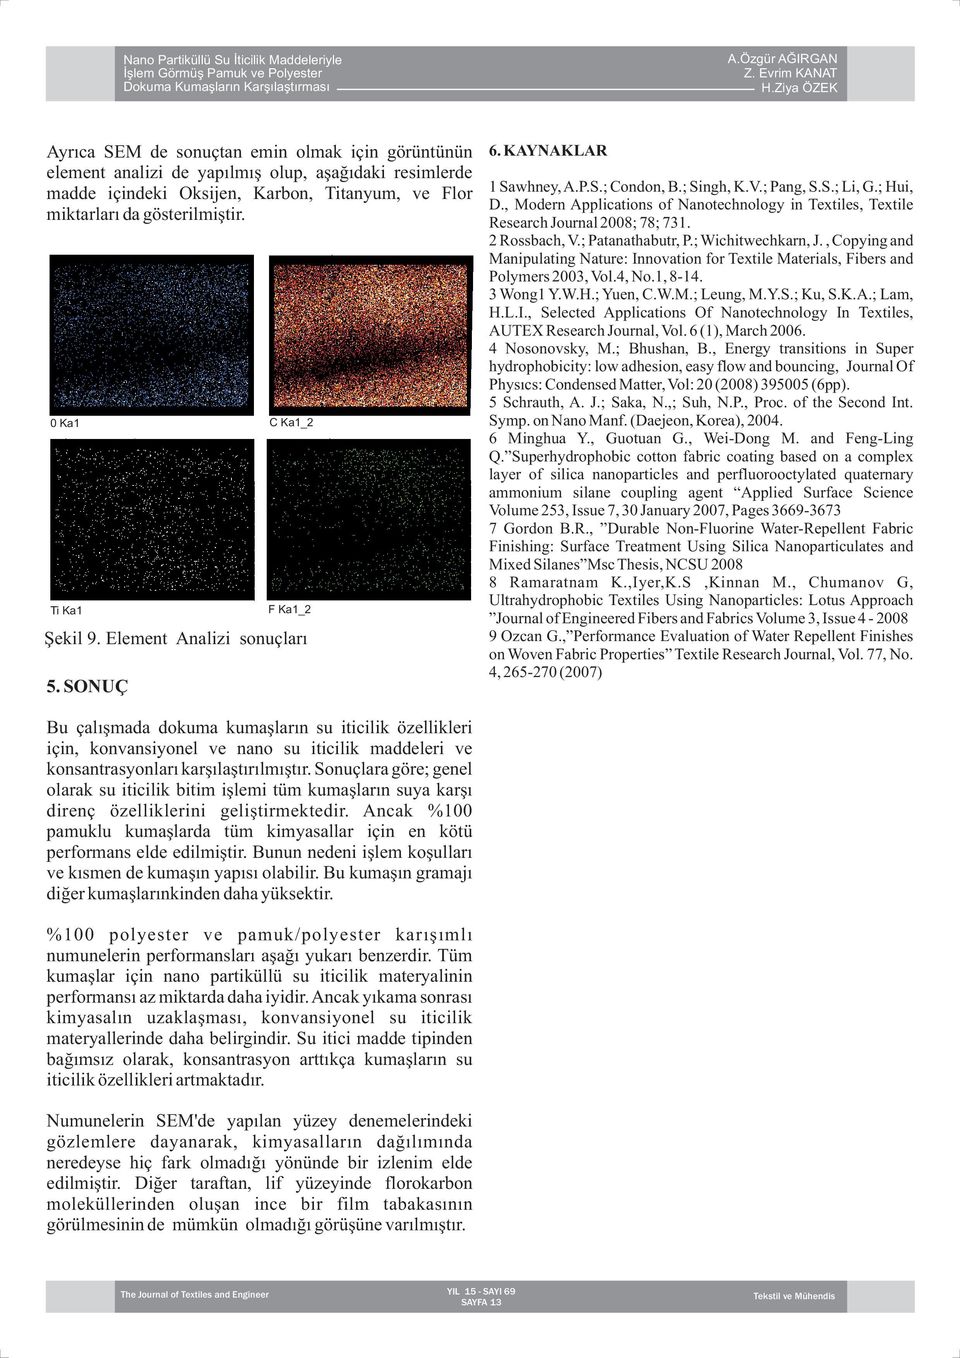 , Modern Applications of Nanotechnology in Textiles, Textile Research Journal 2008; 78; 731. 2 Rossbach, V.; Patanathabutr, P.; Wichitwechkarn, J.